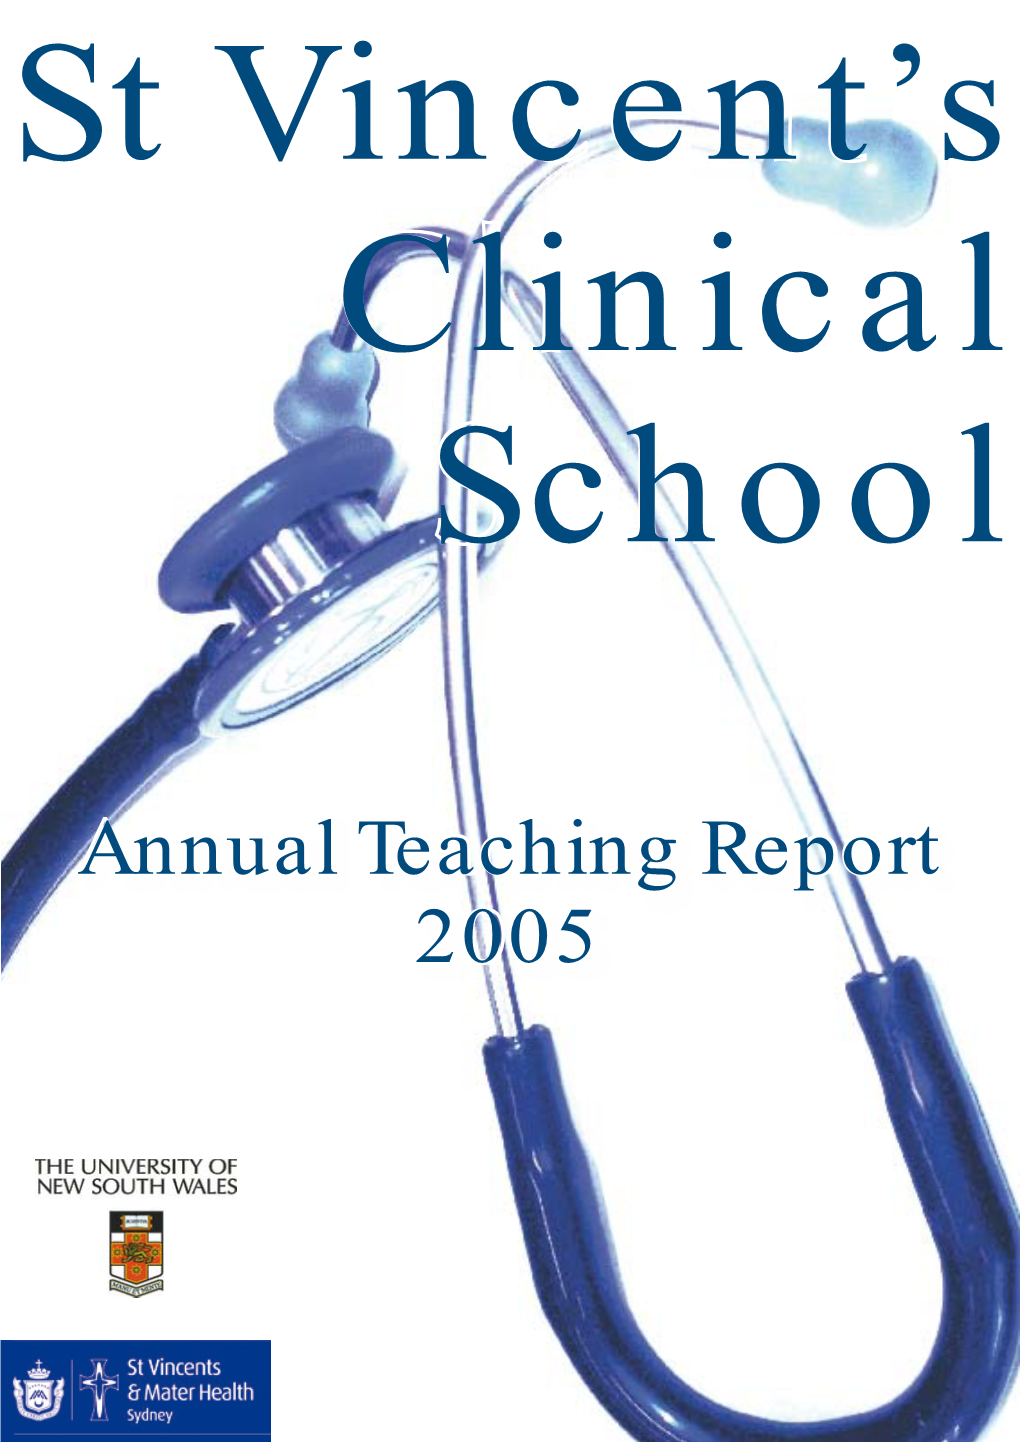 Annual Teaching Report 2005